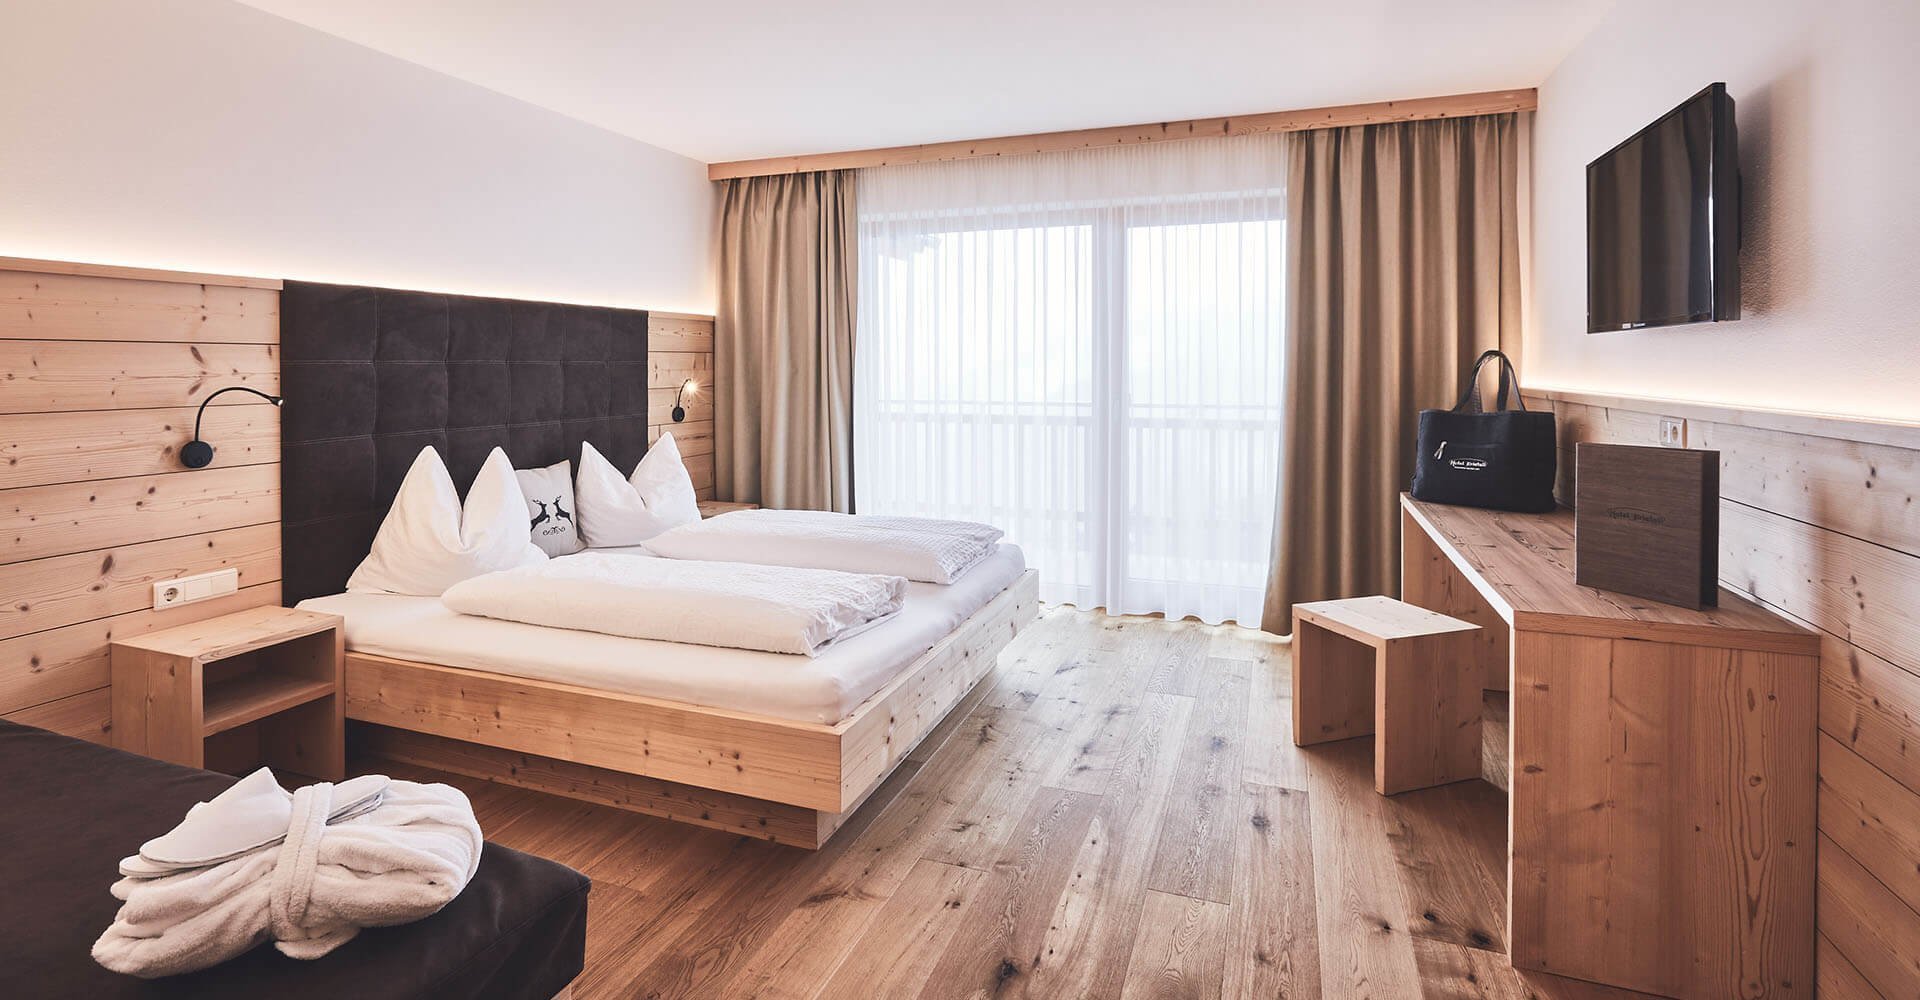 Hotel Kristall - Unser Wanderhotel am Gitschberg/Jochtal | Ihr Ski- & Wanderhotel in Südtirol